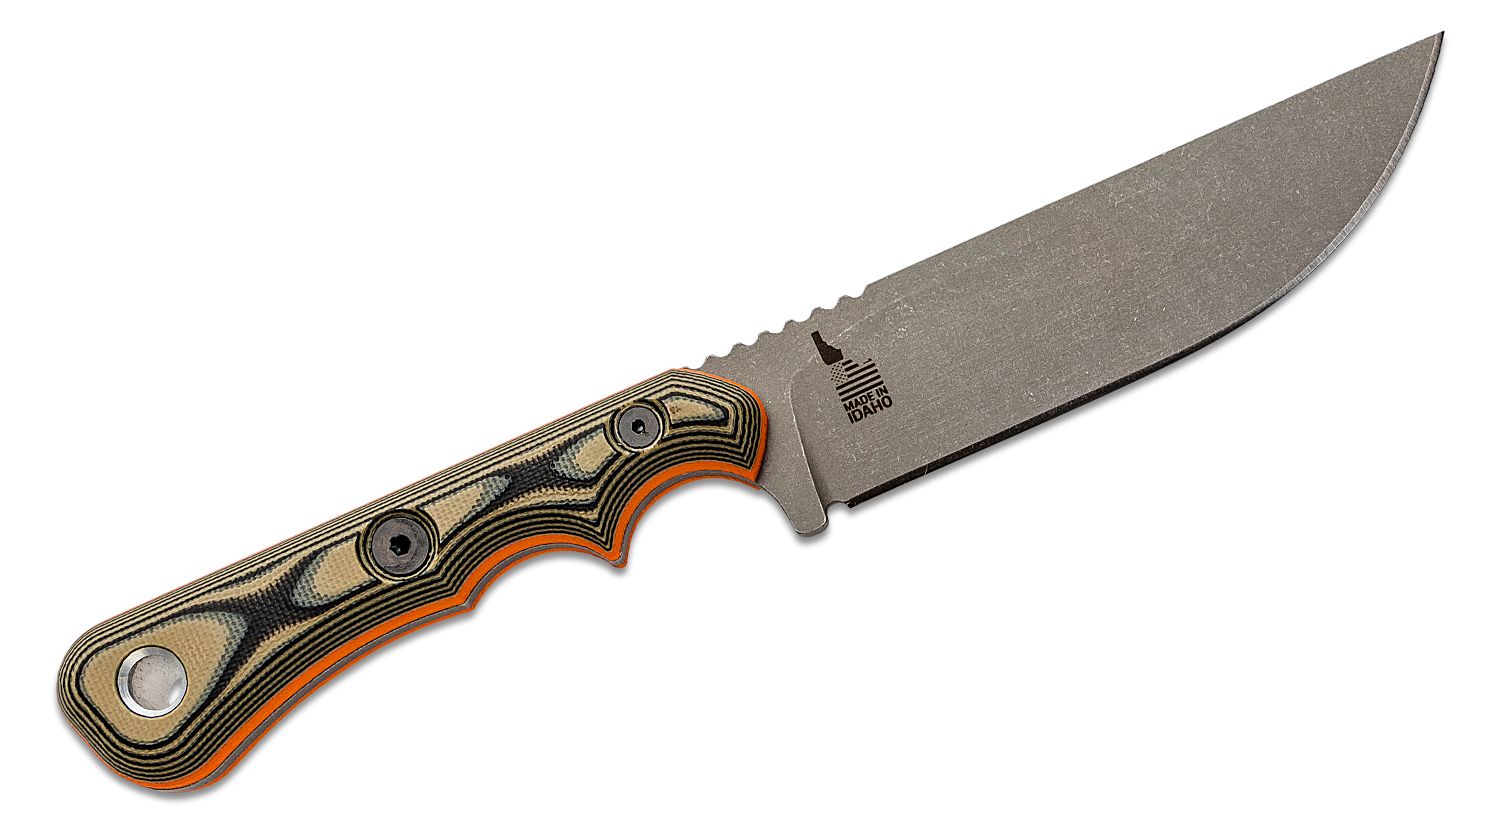 Fixed Blade Skinning Knife – overlandAUS_com